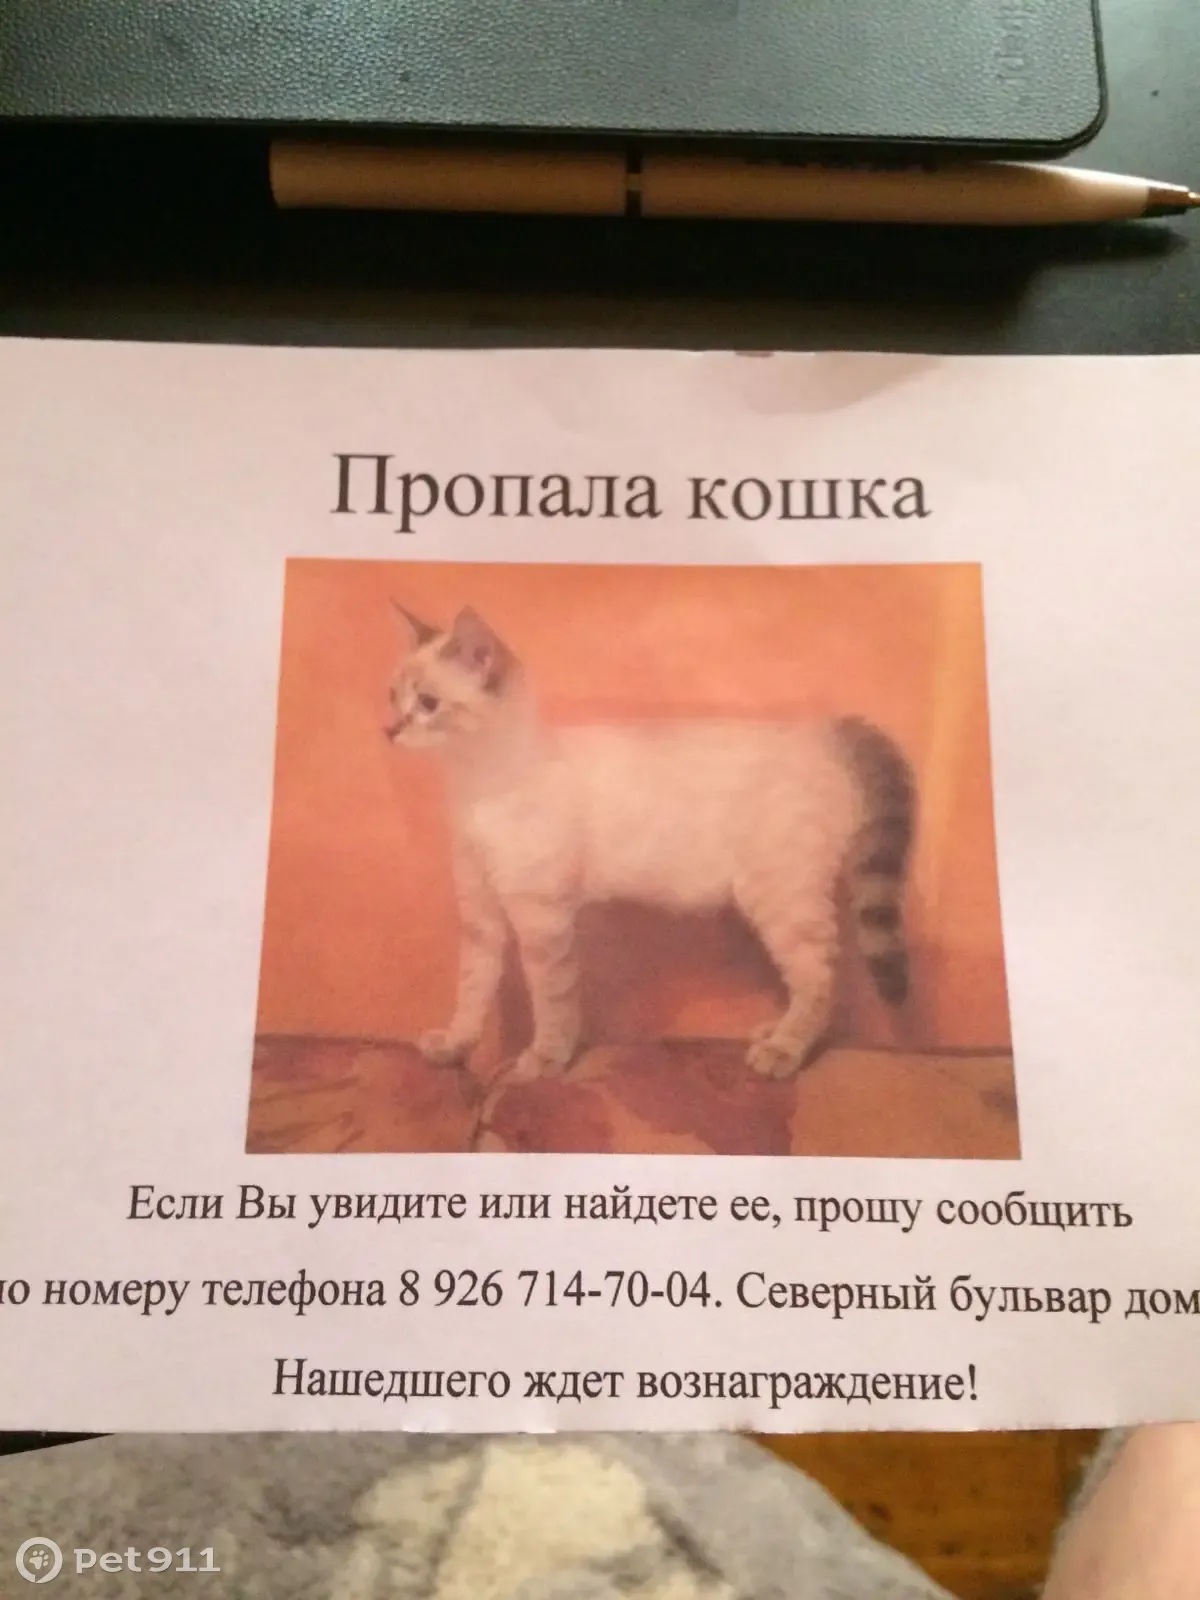 Пропала кошка с балкона на Северном бульваре, Москва